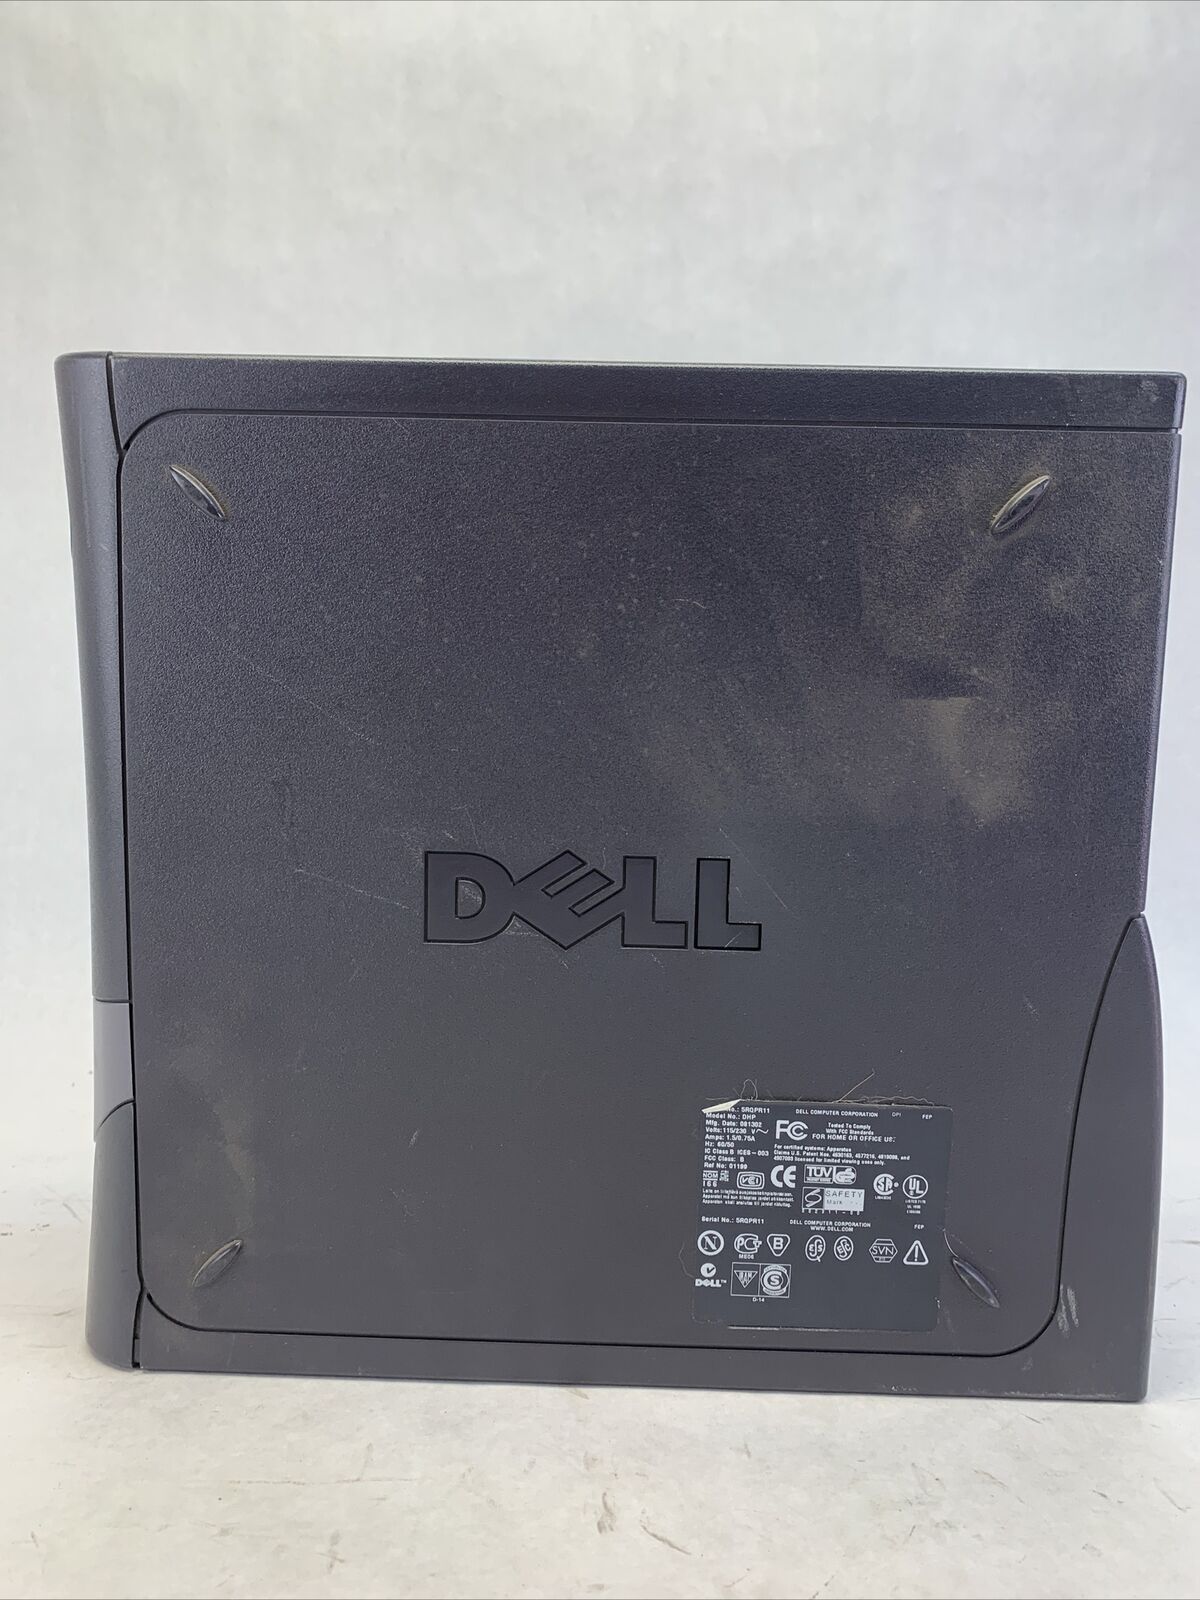 Dell Optiplex GX260 SFF Intel Pentium 4 2GHz 512MB RAM No HDD No OS